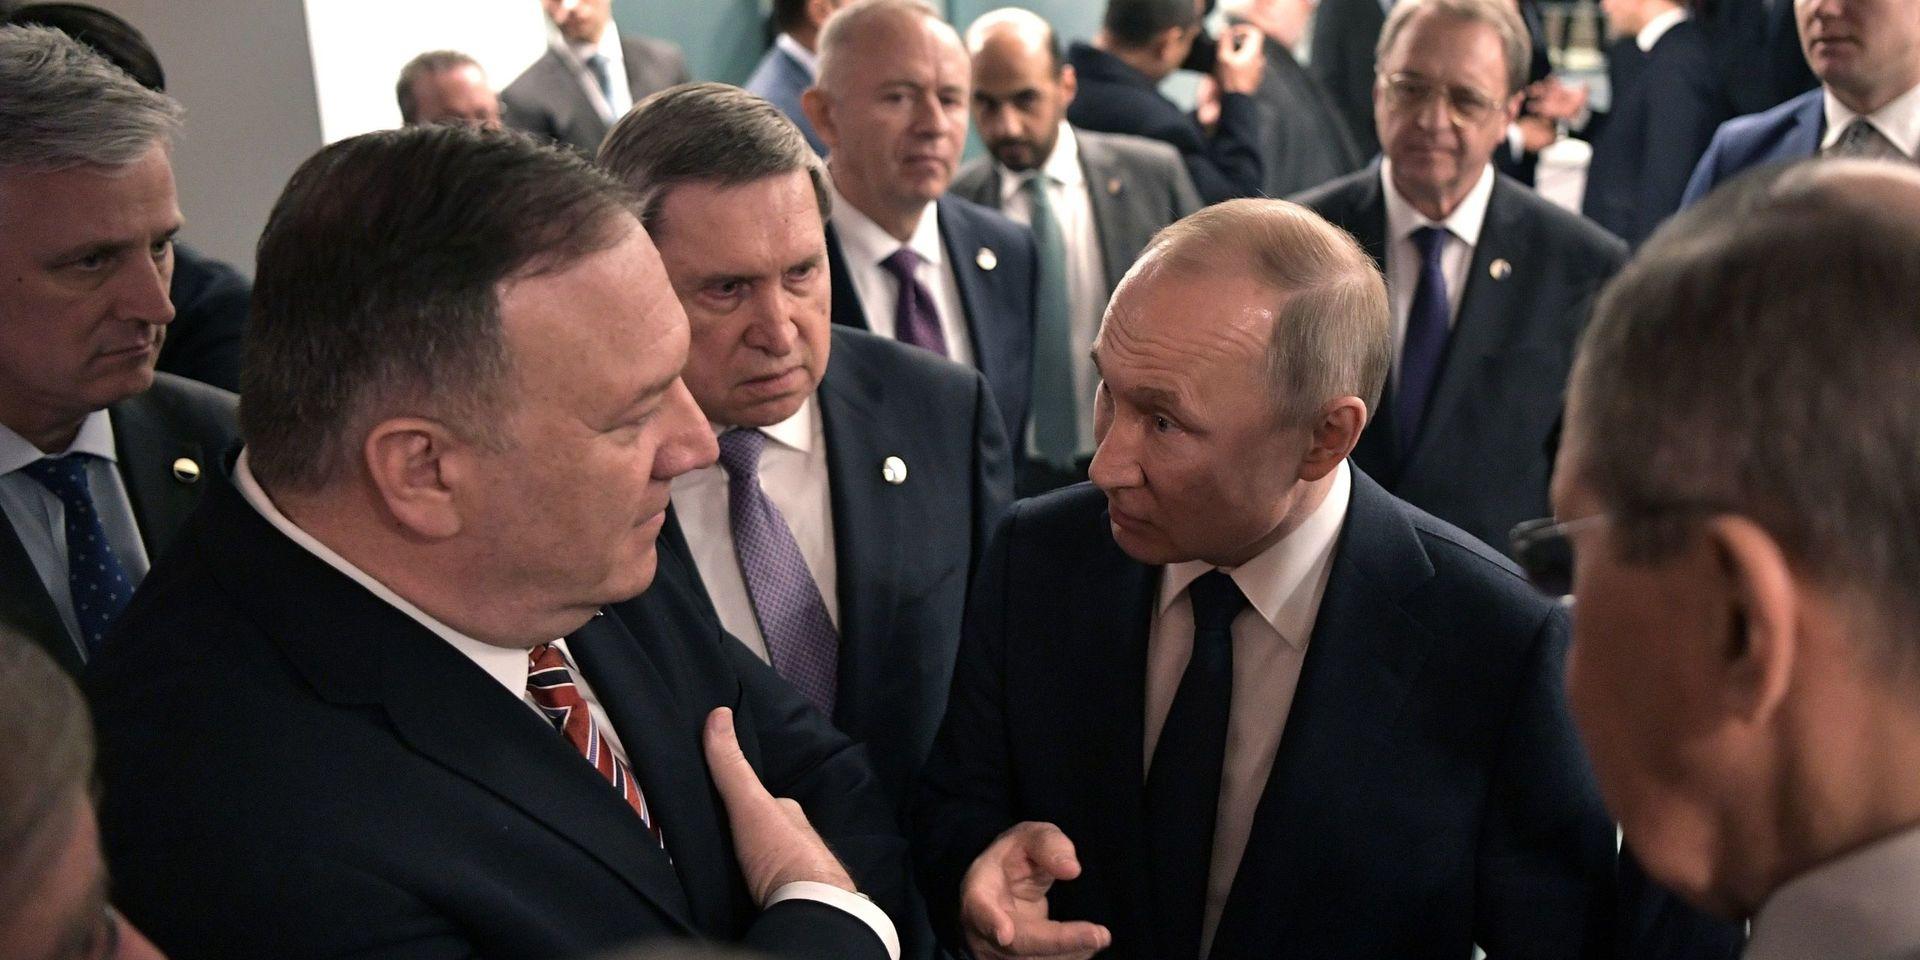 Rysslands president Vladimir Putin i samspråk med USA:s utrikesminister Mike Pompeo i samband med Berlinmötet.